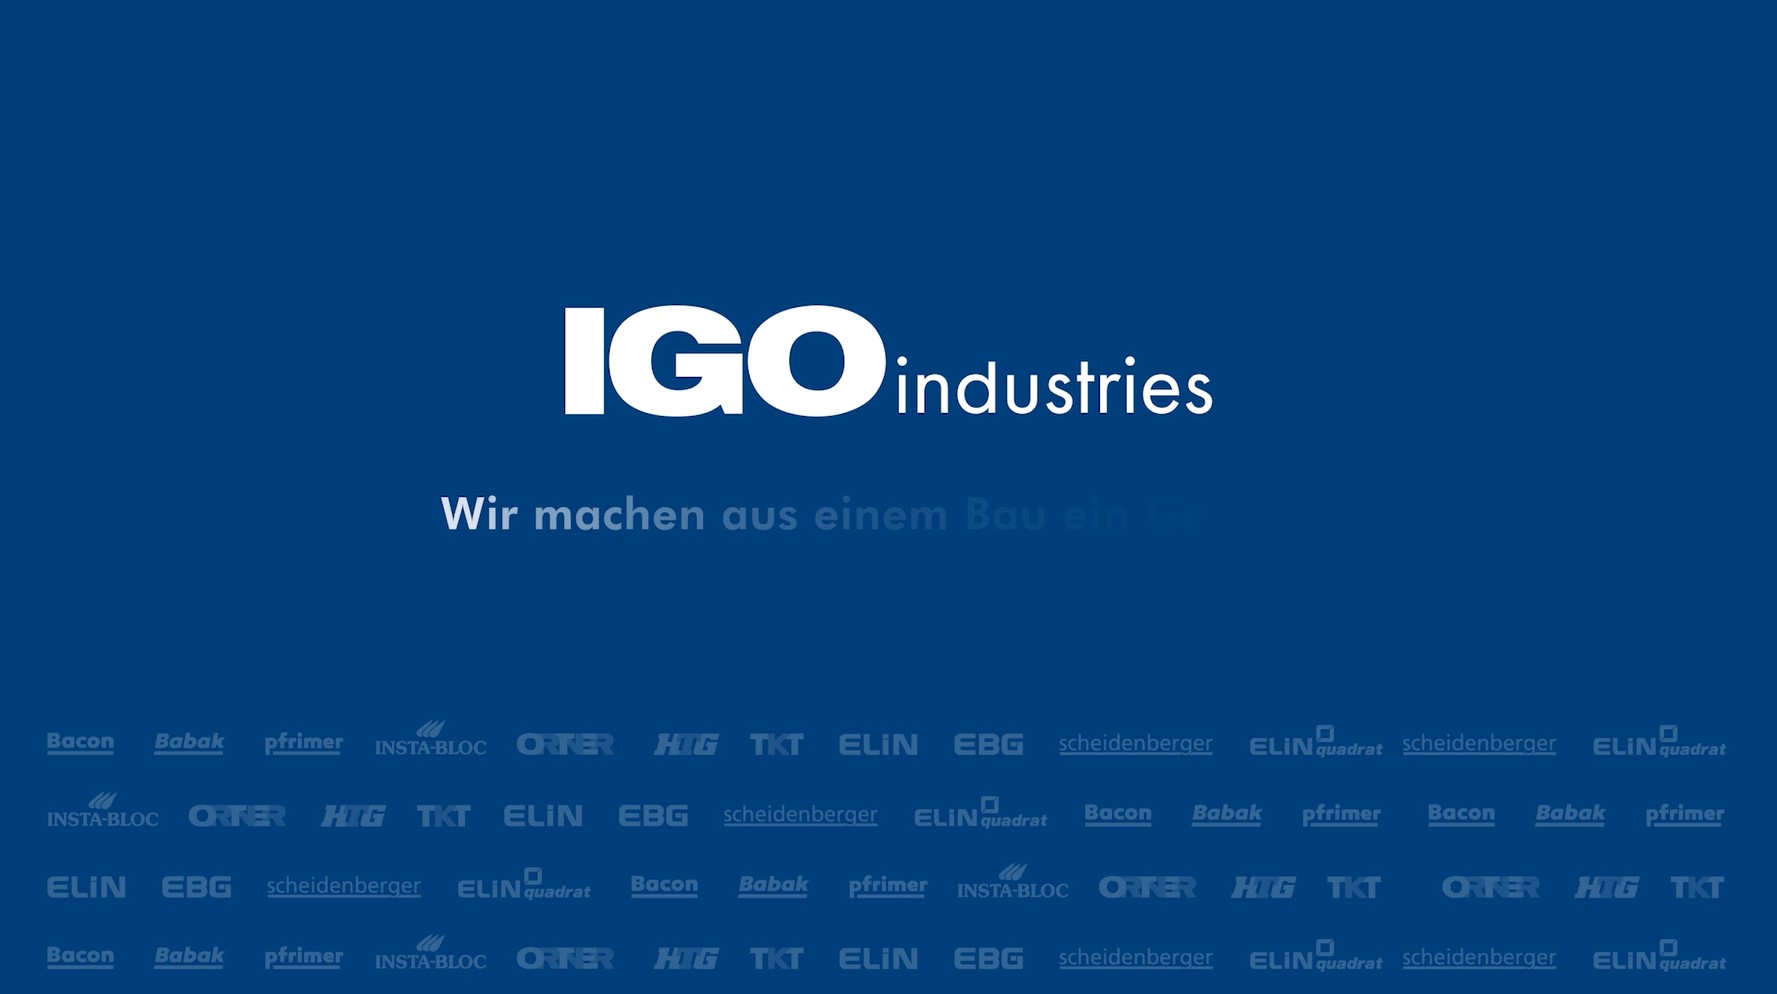 IGO Industries Highlights 2021